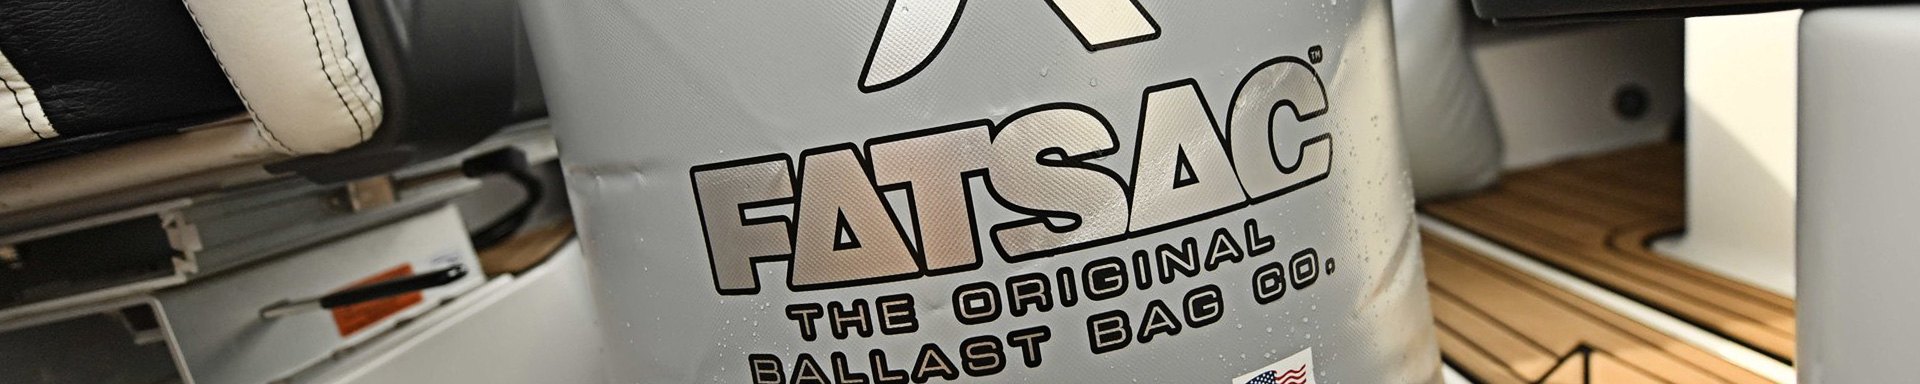 FatSac Fenders & Buoys